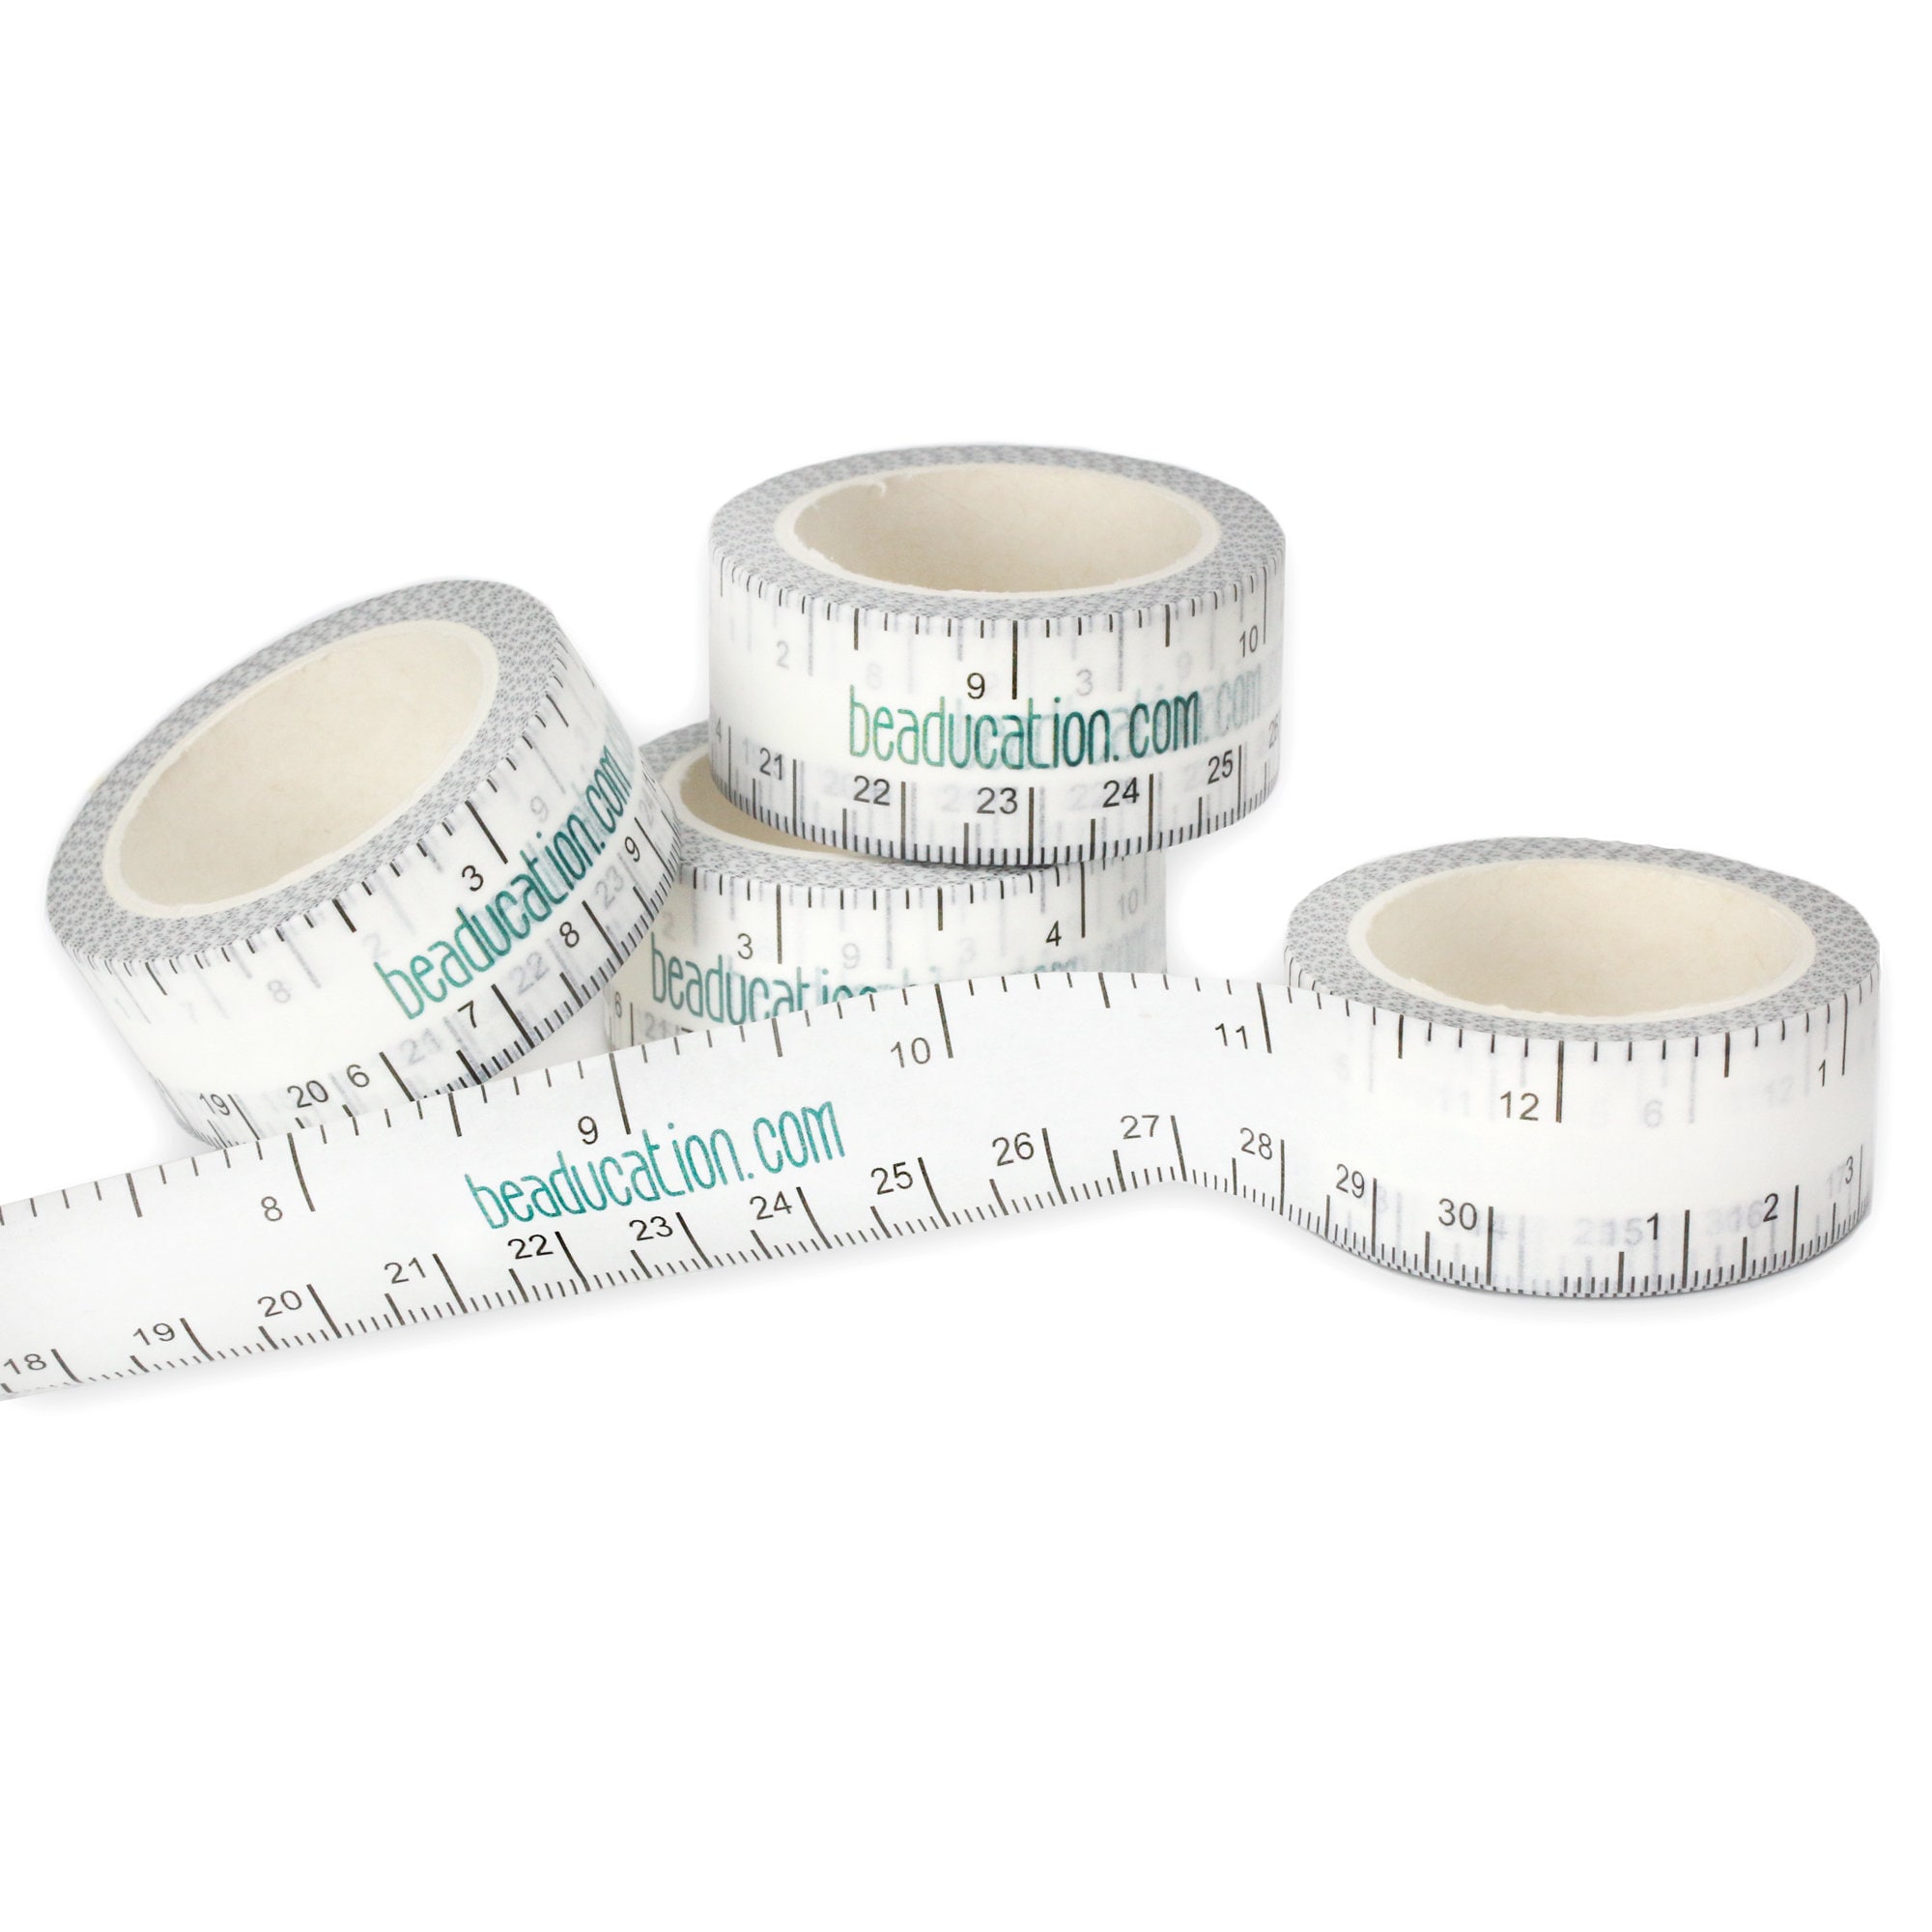 Handy Tape II Self-Adhesive Measuring Tape, 25' x 3/4 Roll, Made in USA!